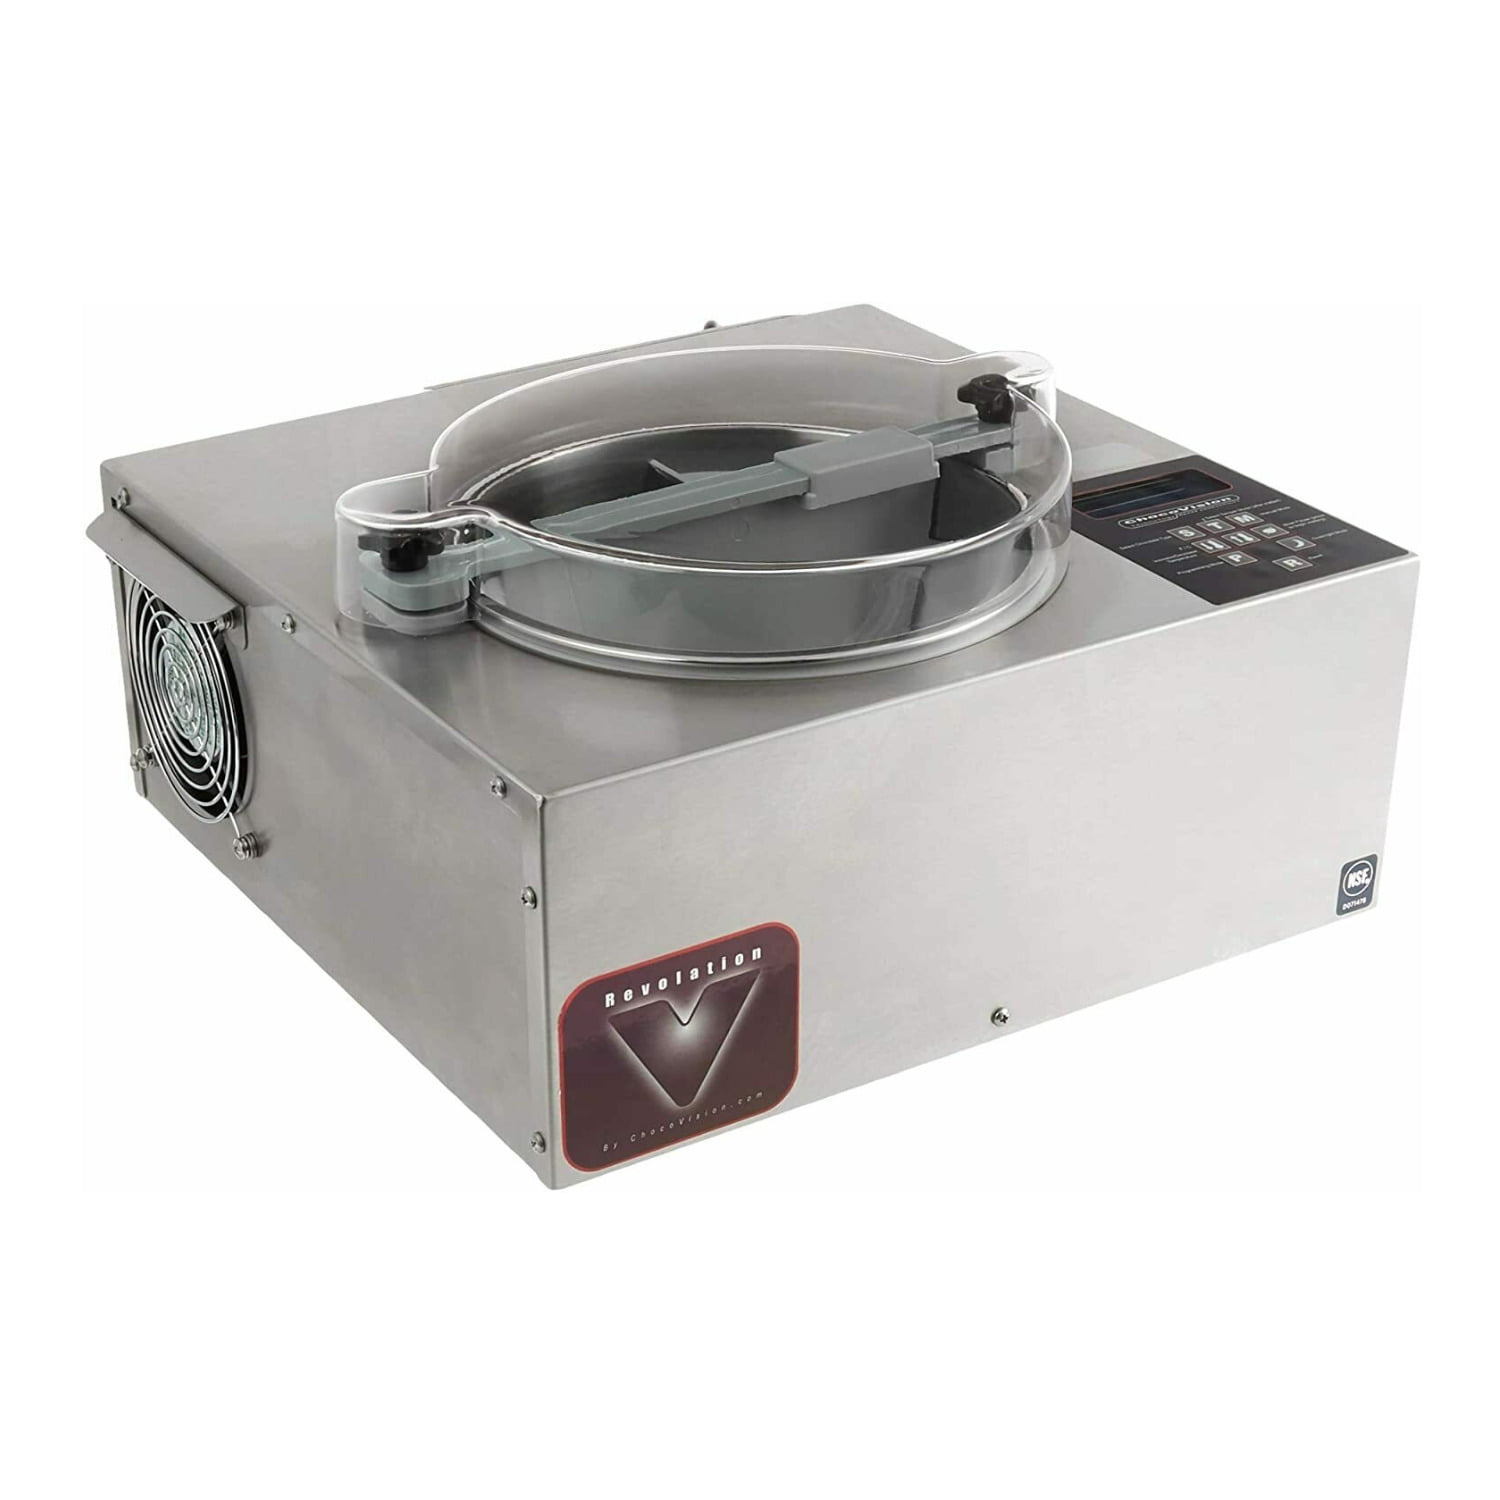 TECHTONGDA 110v Chocolate Melt Machine Stainless Steel Single Pot for sale online 